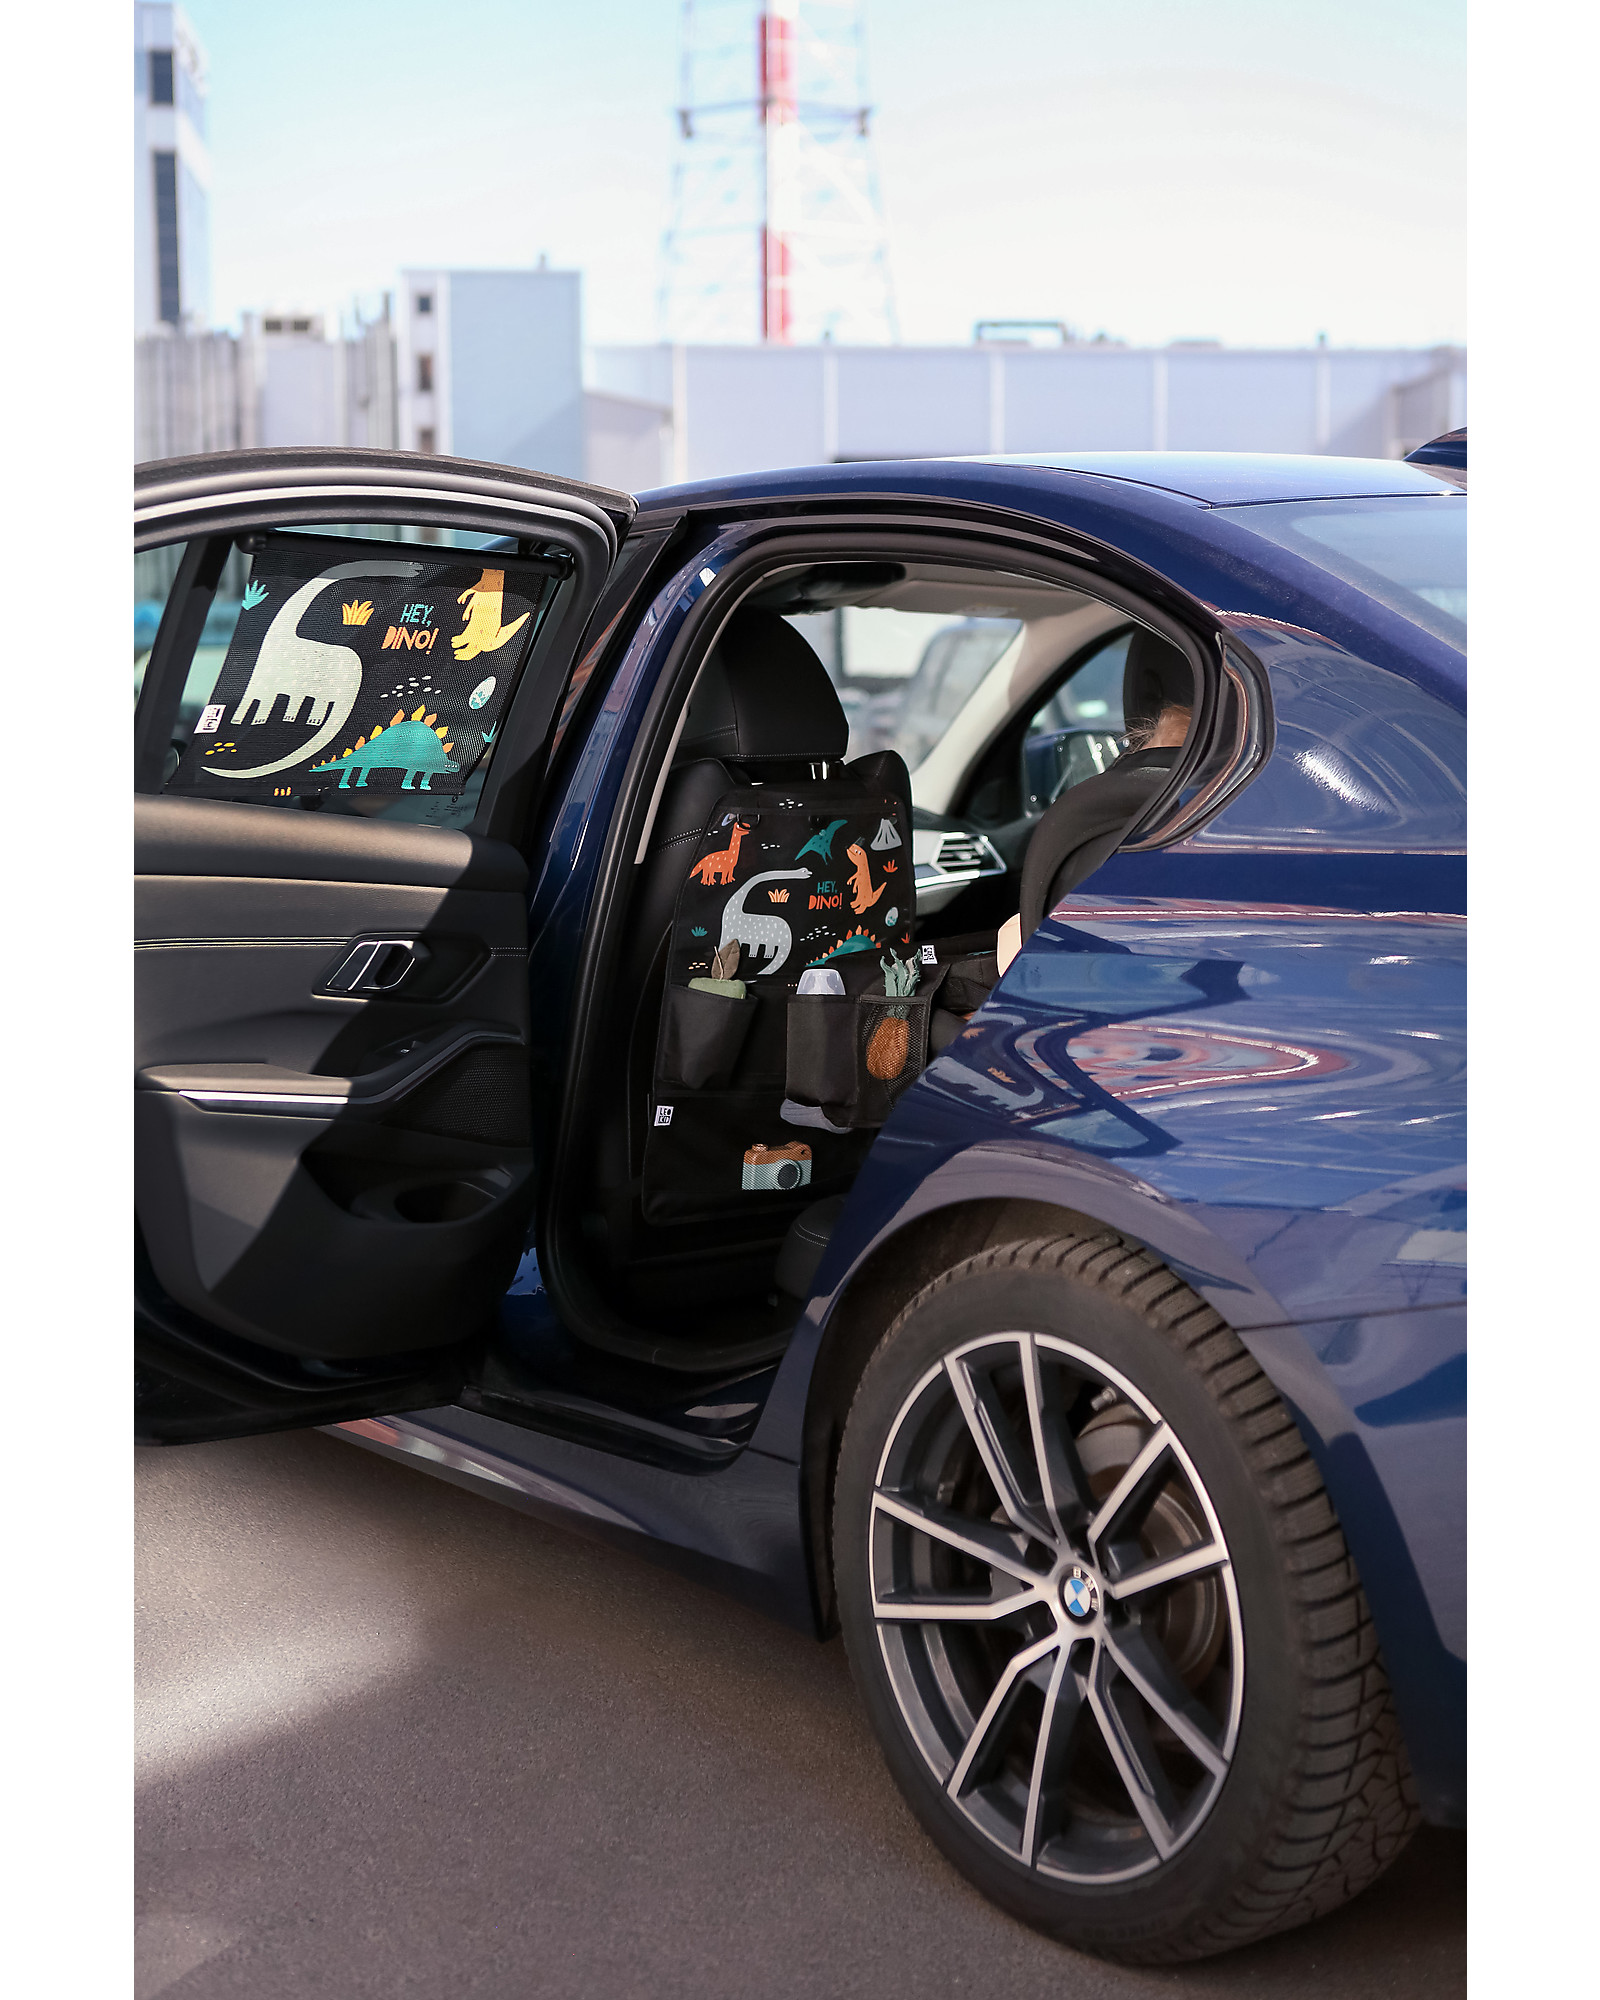 https://data.family-nation.com/imgprodotto/leokid-car-sun-shade-hey-dino-protects-from-uvb-rays-car-seat-accessories_454017_zoom.jpg